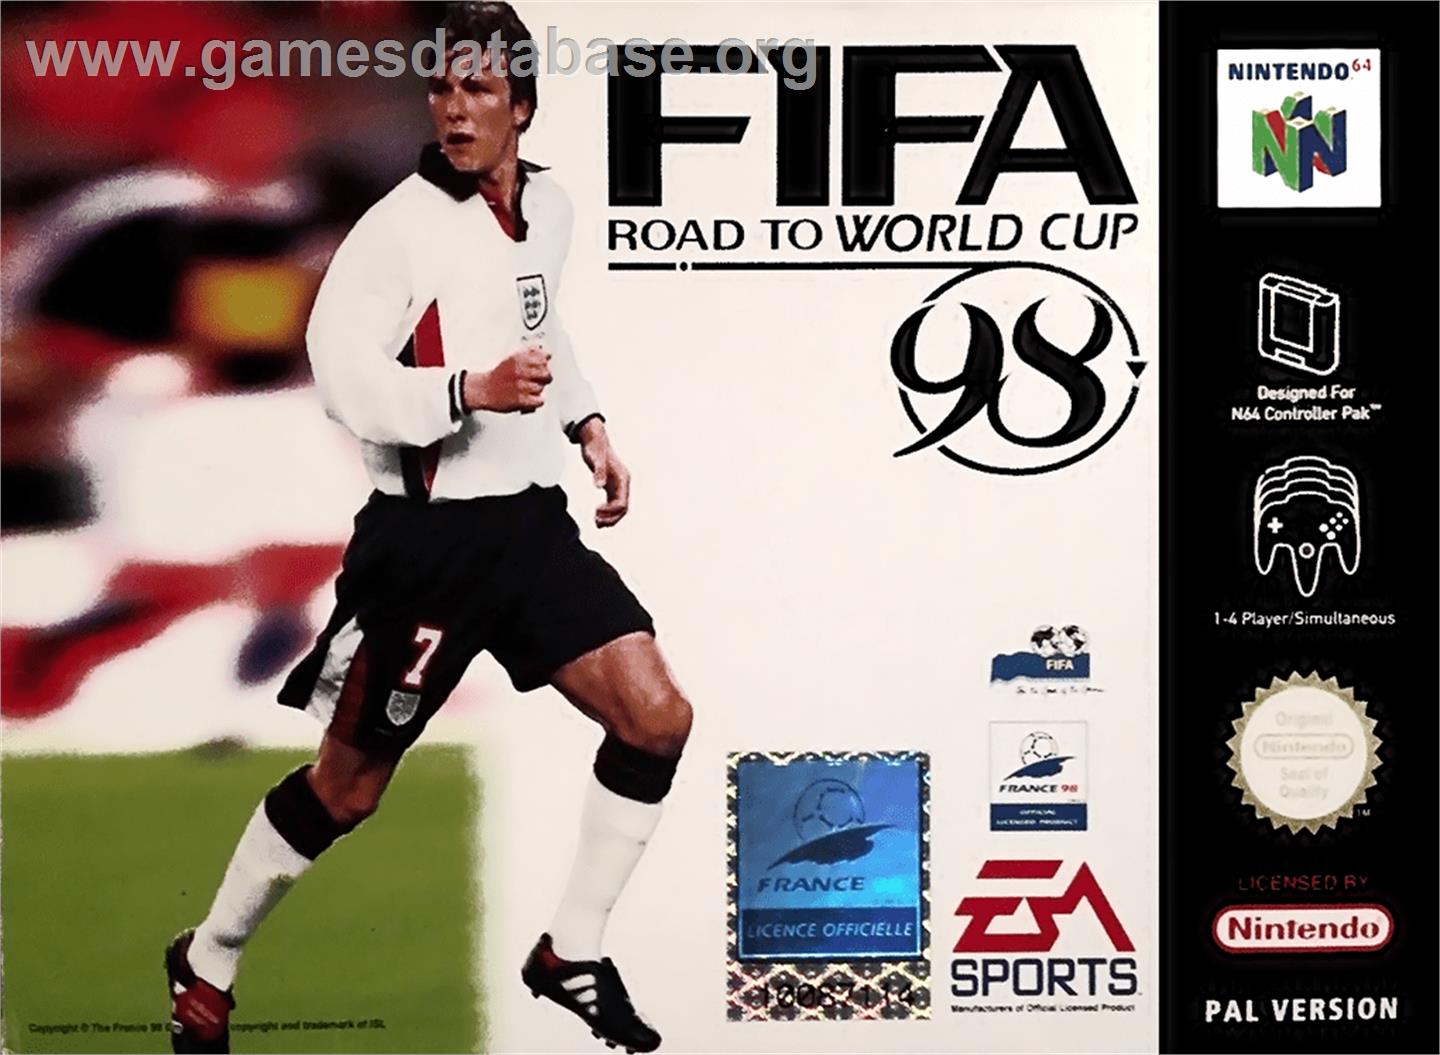 FIFA 98: Road to World Cup - Nintendo N64 - Artwork - Box